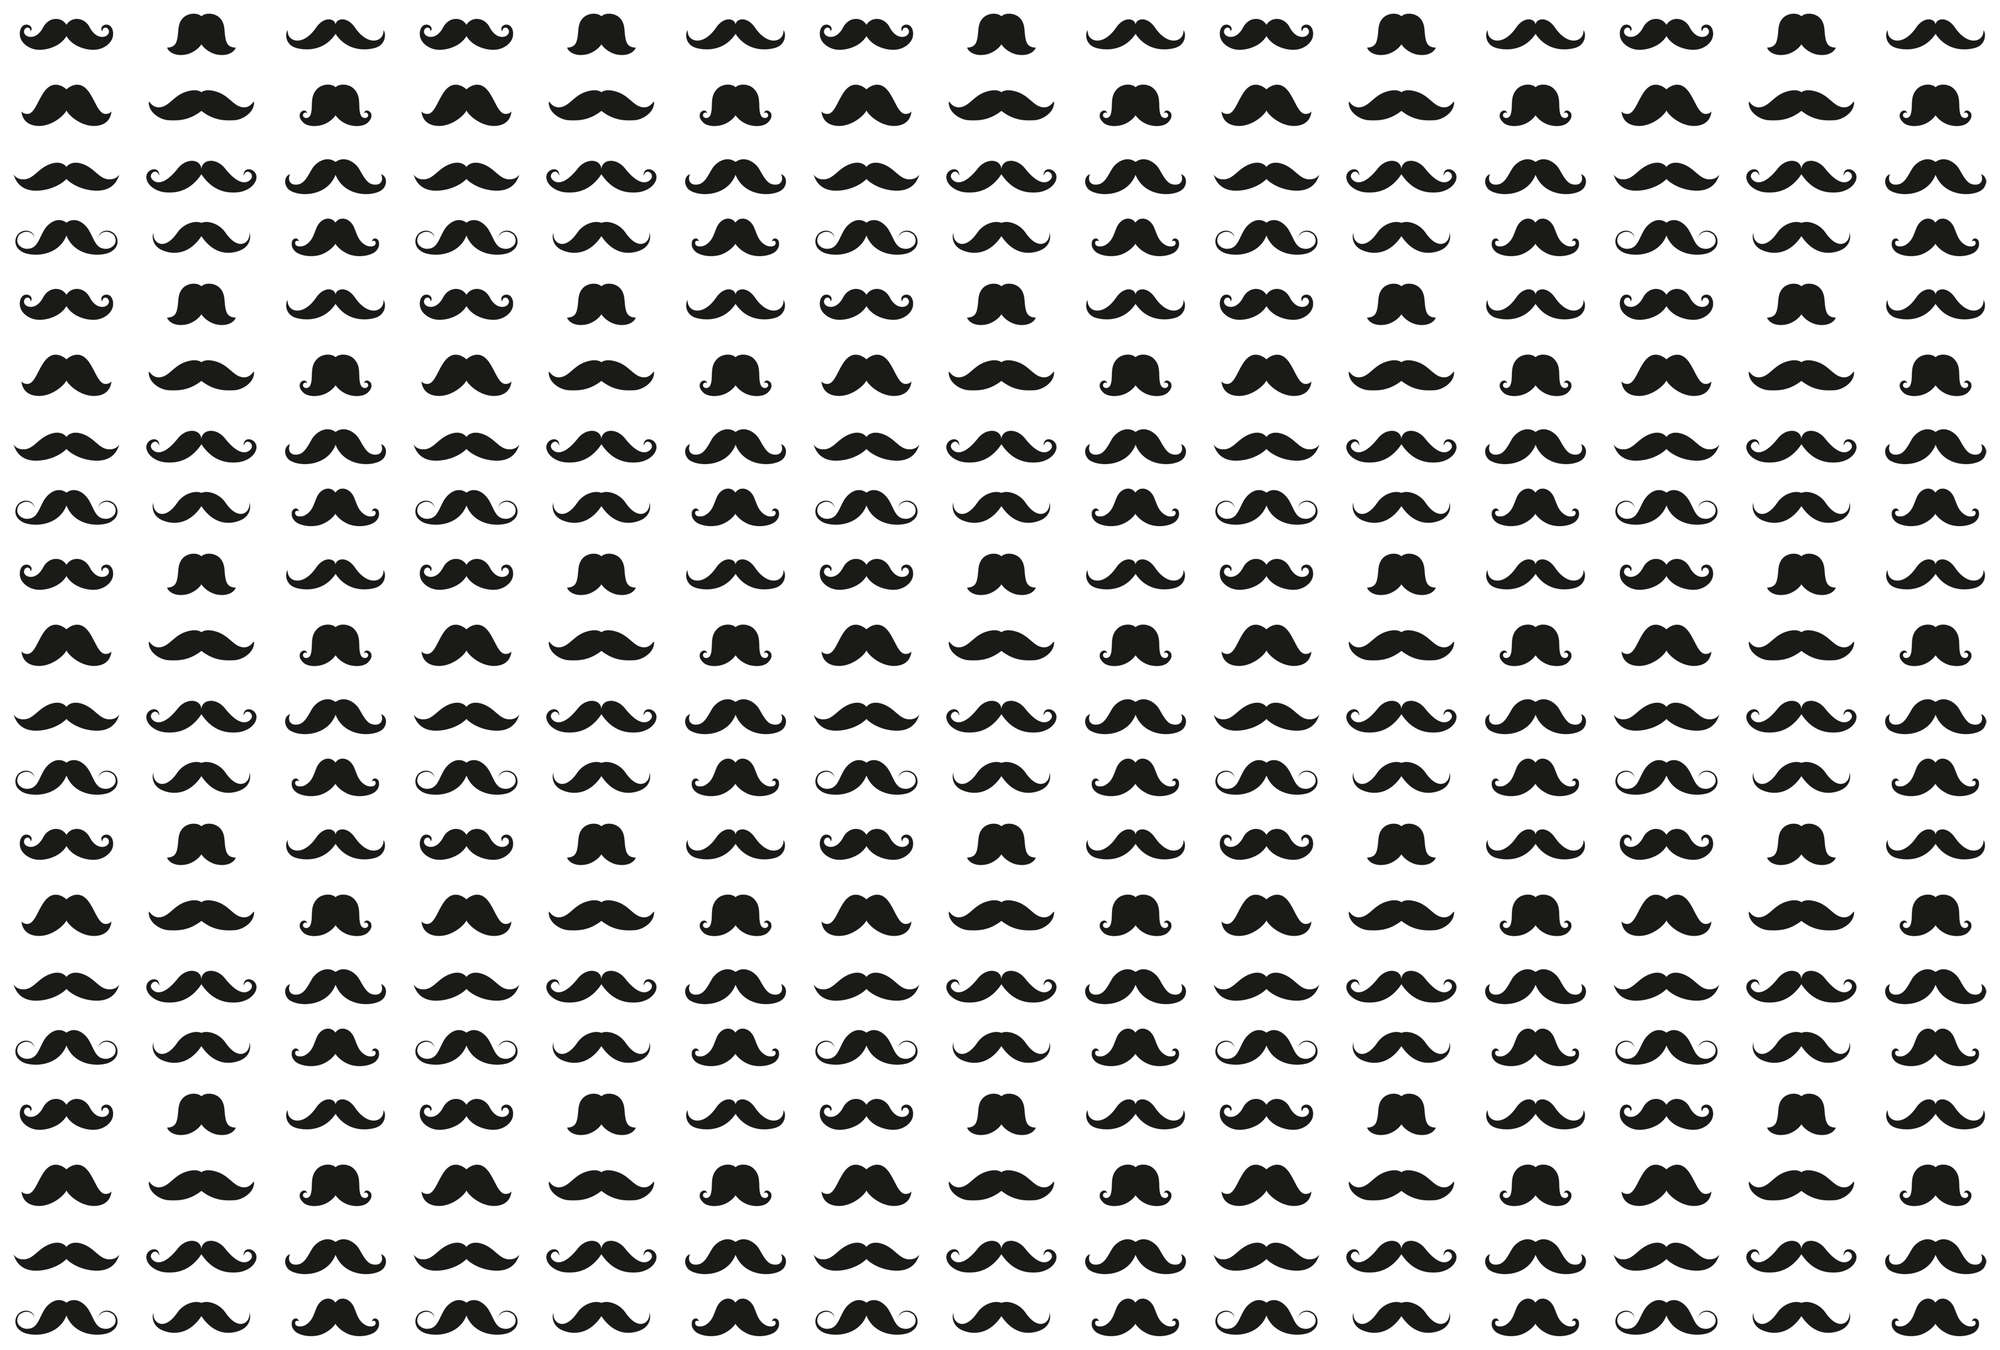             Photo wallpaper Mustache cool moustache motif - black and white - textured non-woven
        